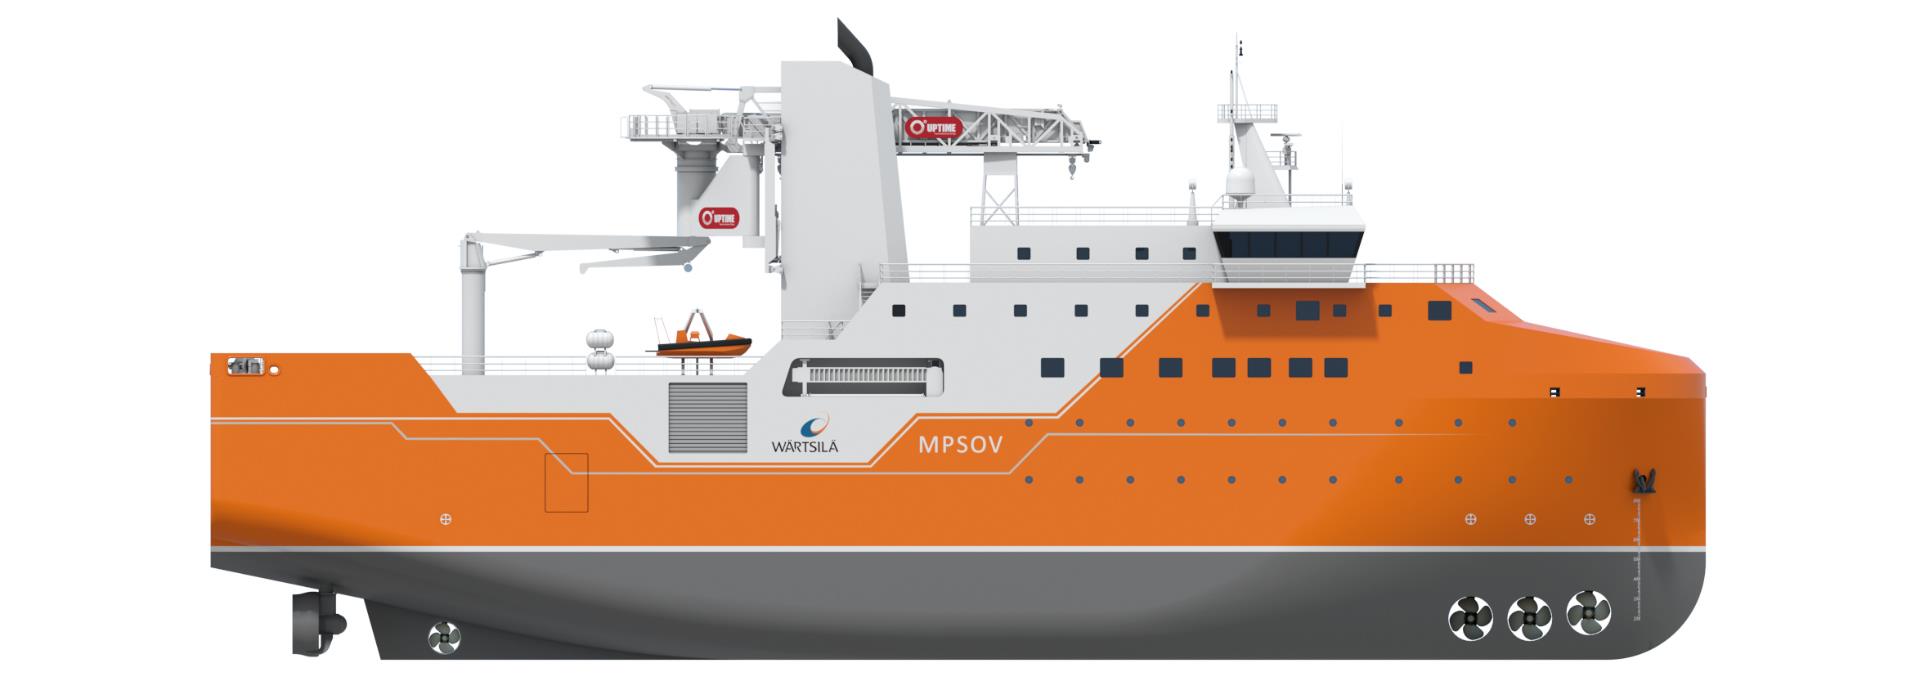 Wärtsilä designs multi-purpose SOV for US offshore wind market